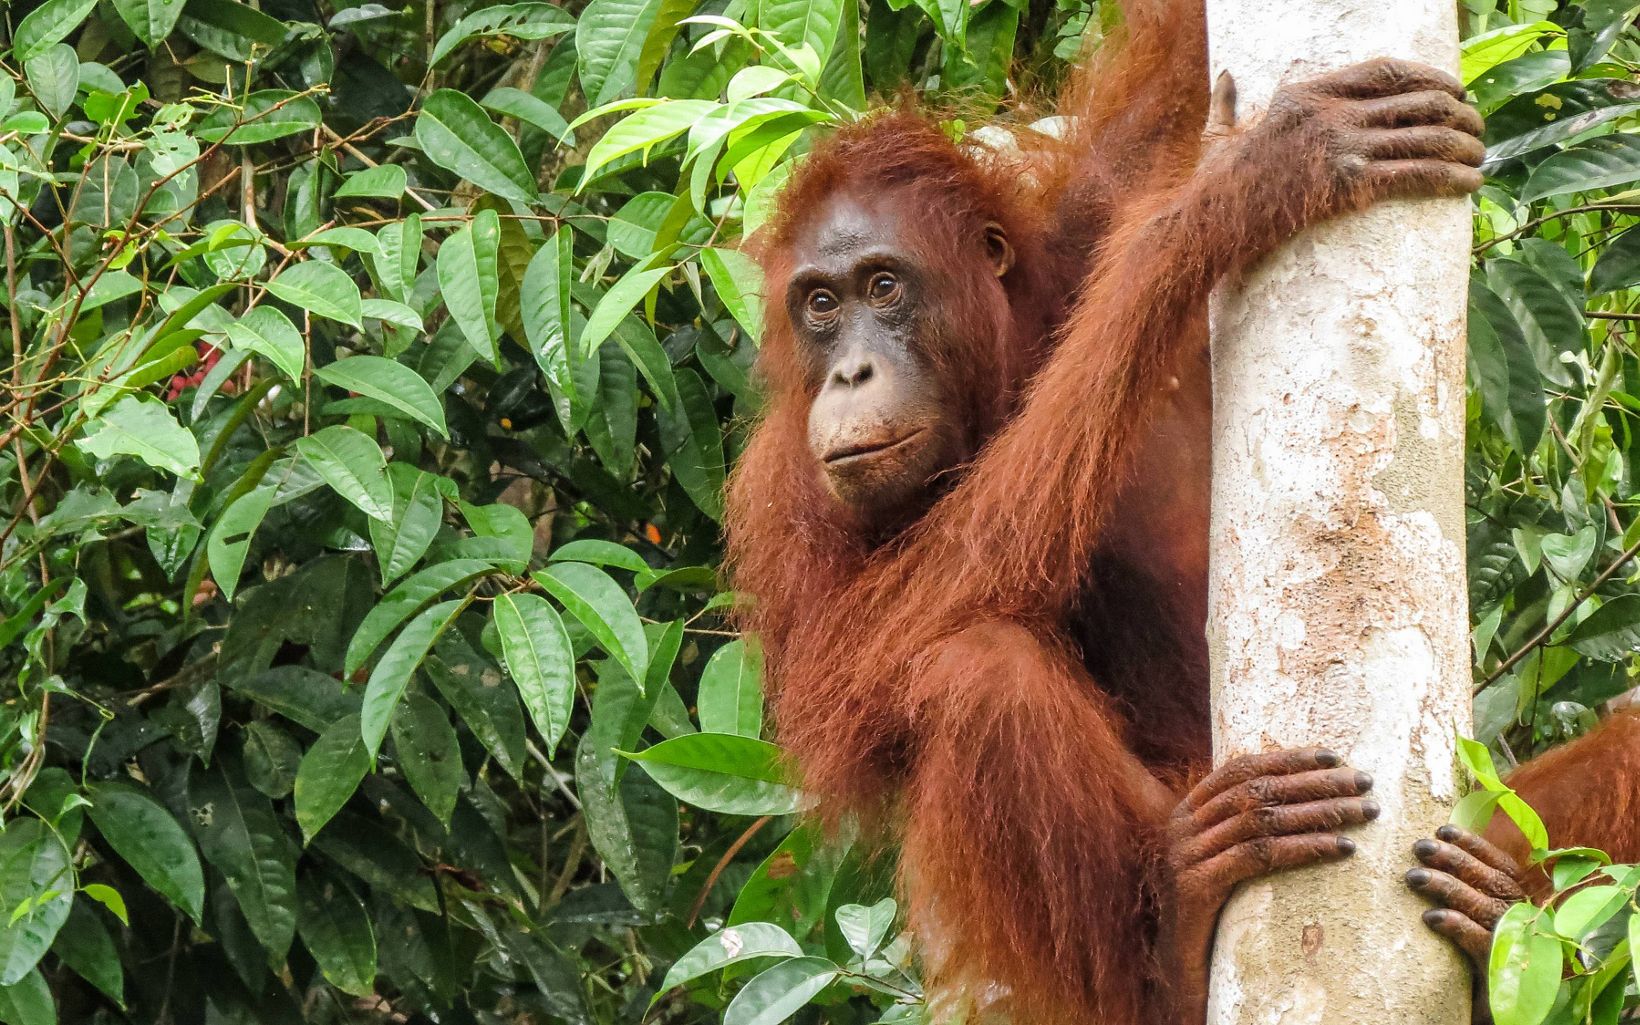 An orangutan in Tanjung Puting National Park in Borneo, Indonesia. © Katie Hawk/The Nature Conservancy